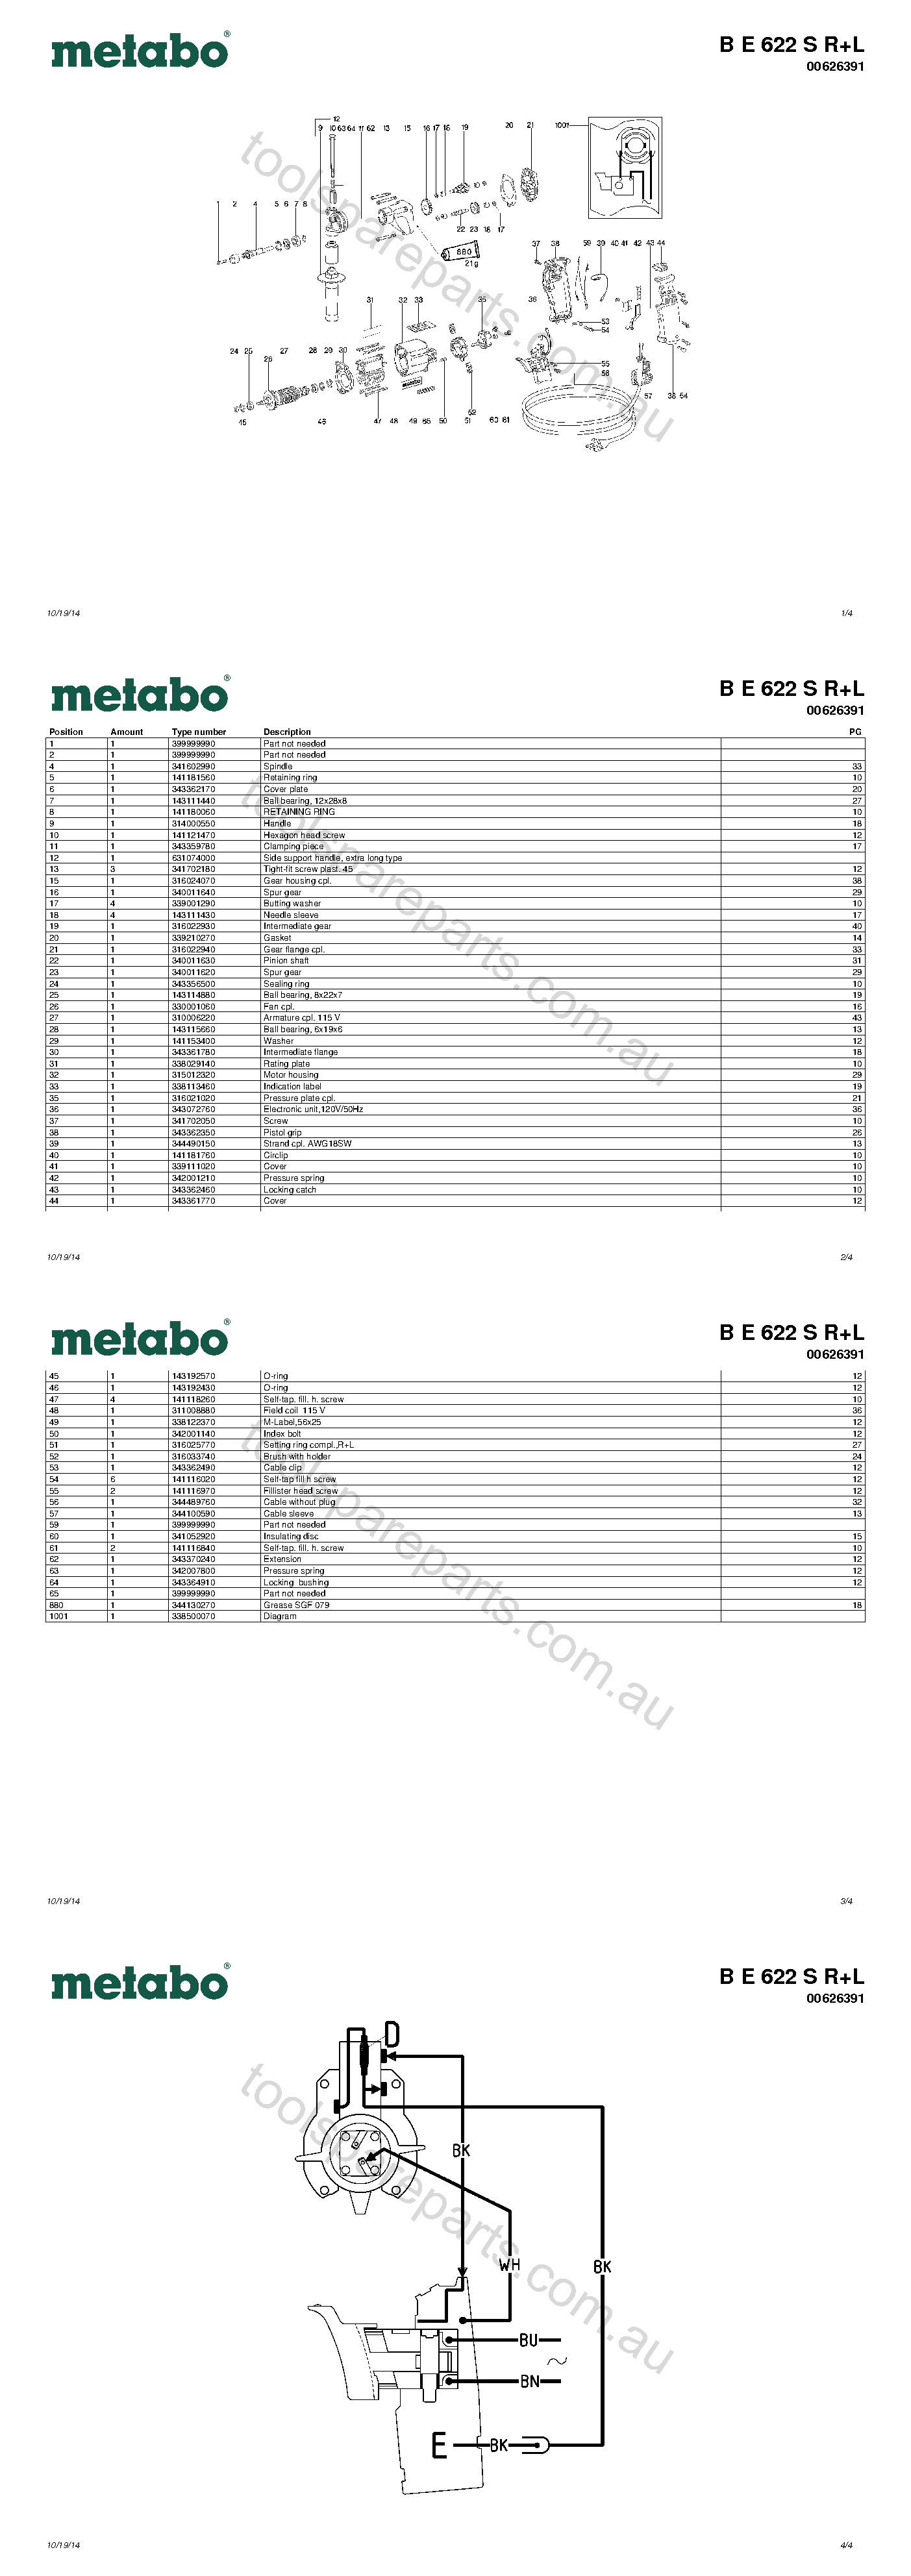 Metabo B E 622 S R+L 00626391  Diagram 1